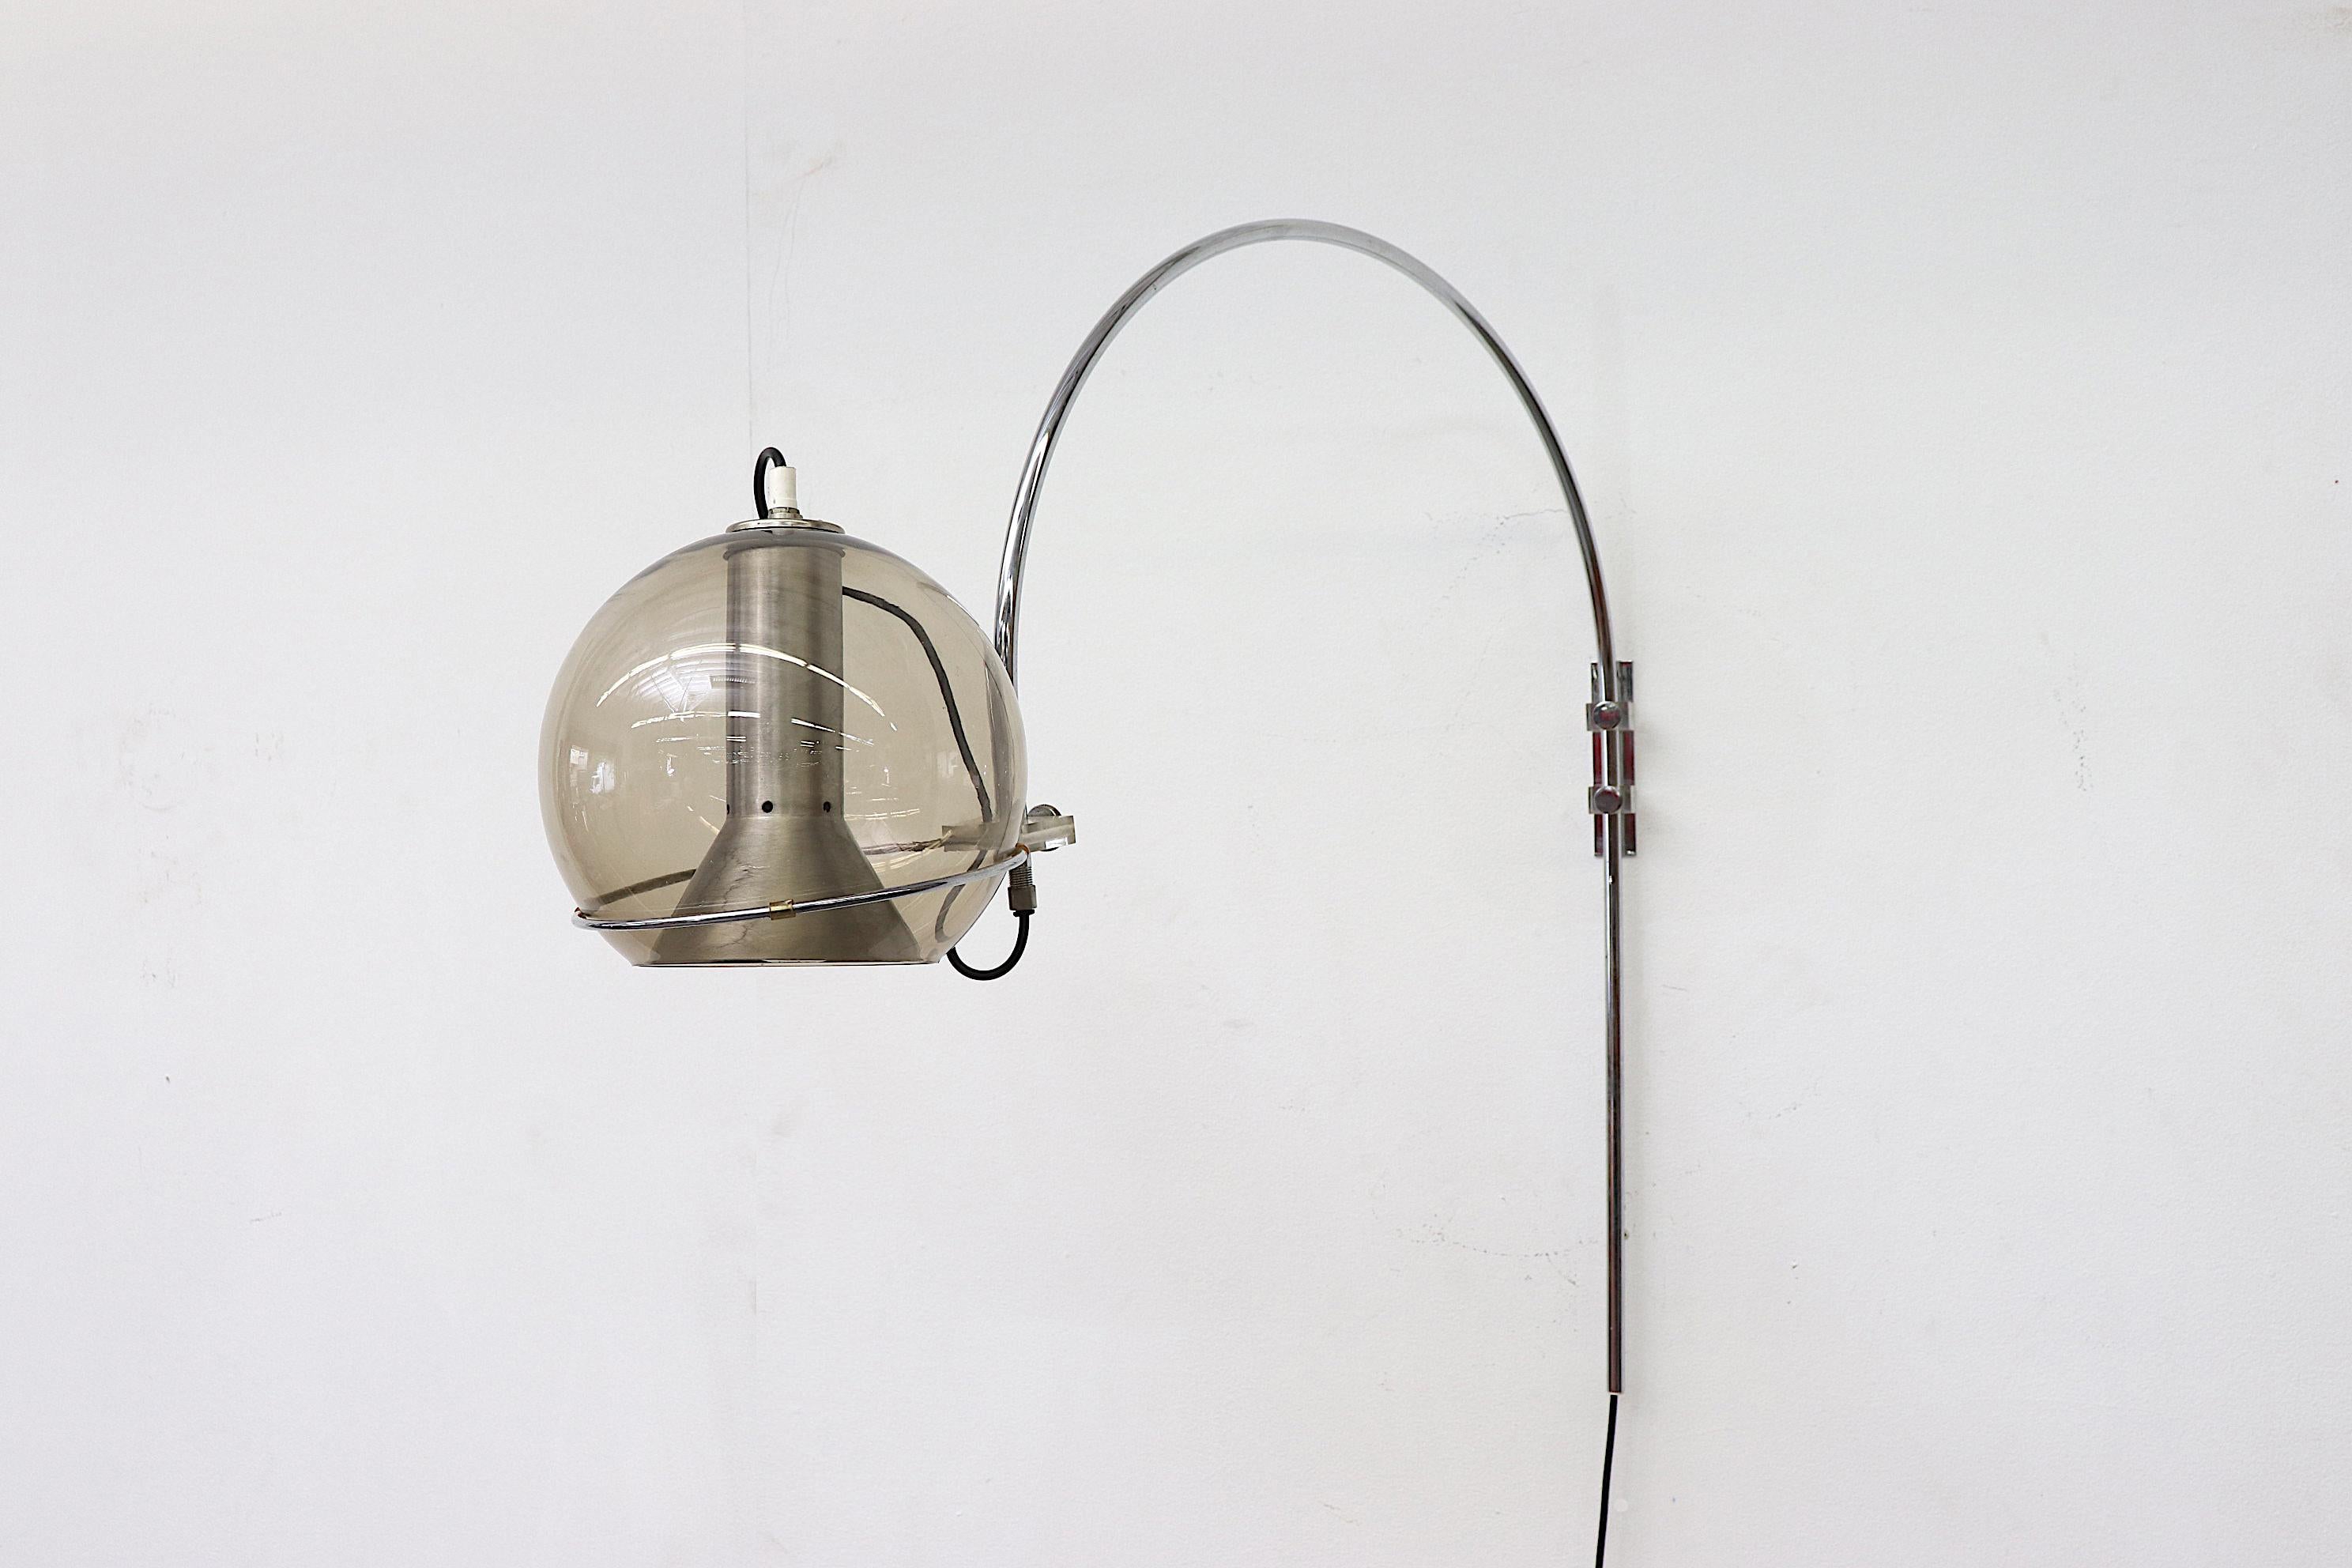  RAAK  'Sagittarius' Wall Lamp by Frank Ligtelijn  2